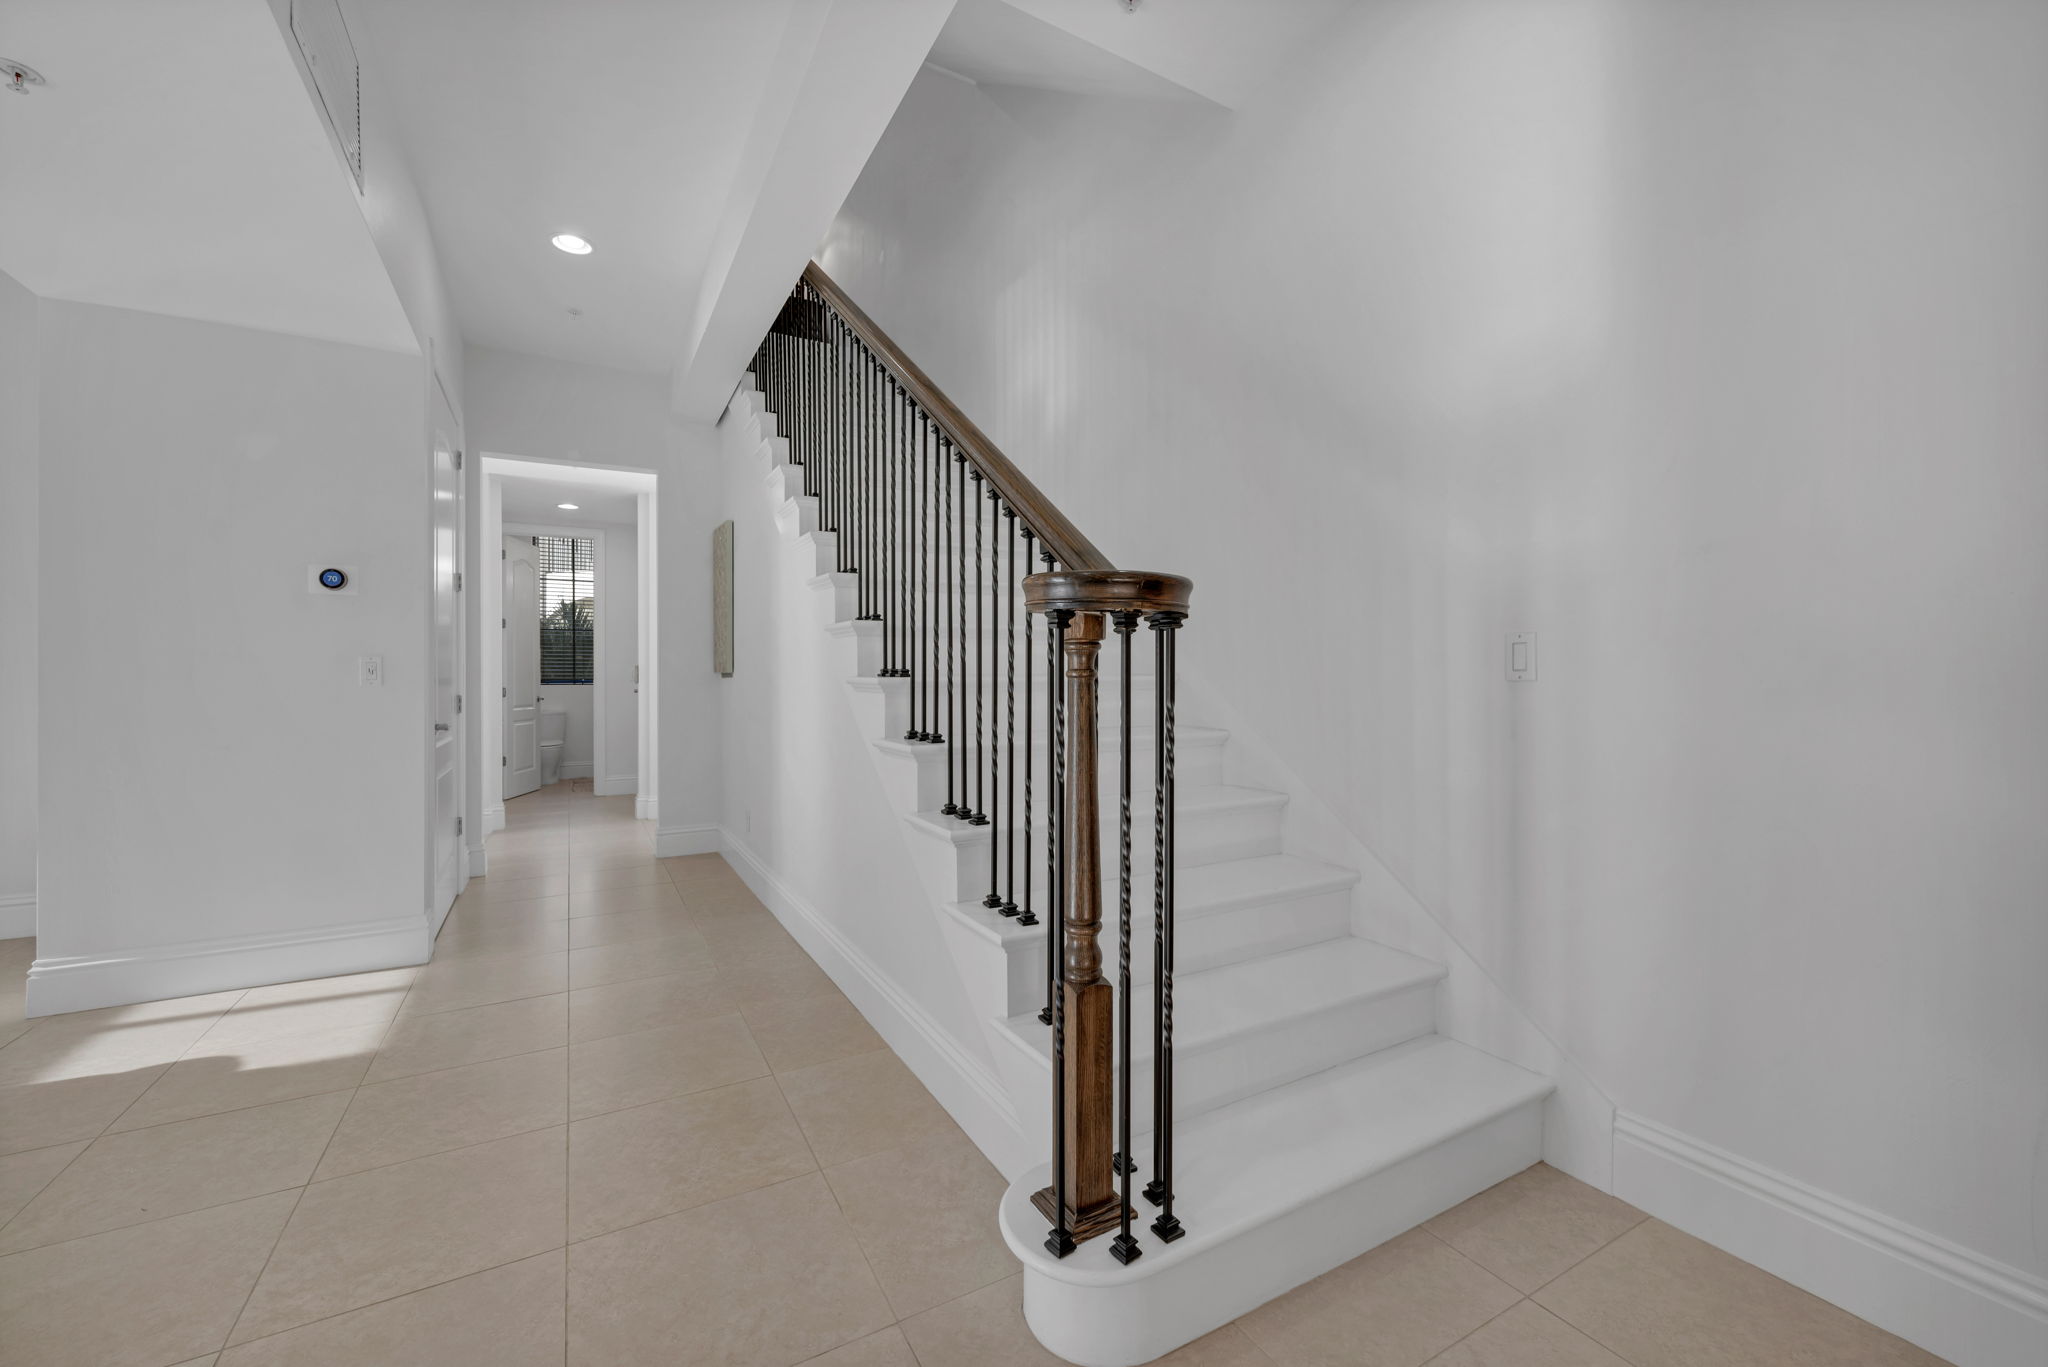 Foyer - Stairway